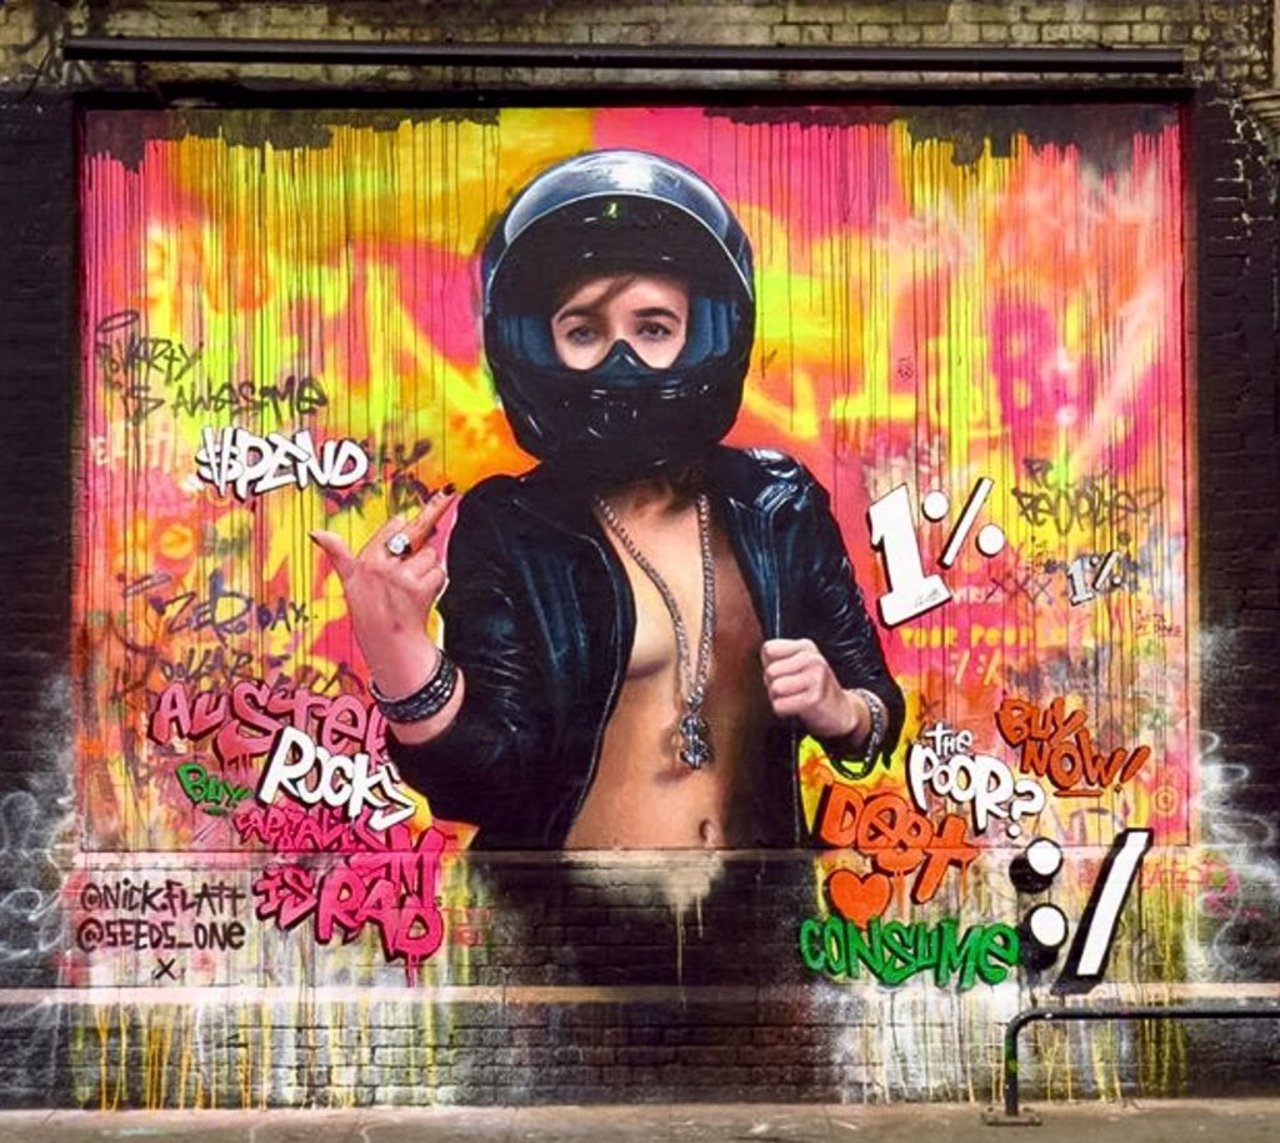 Really like this #streetart from nick flat & seeds1 in #London Very cool! #graffiti #art #urbanart https://t.co/lKDlB6pS0s